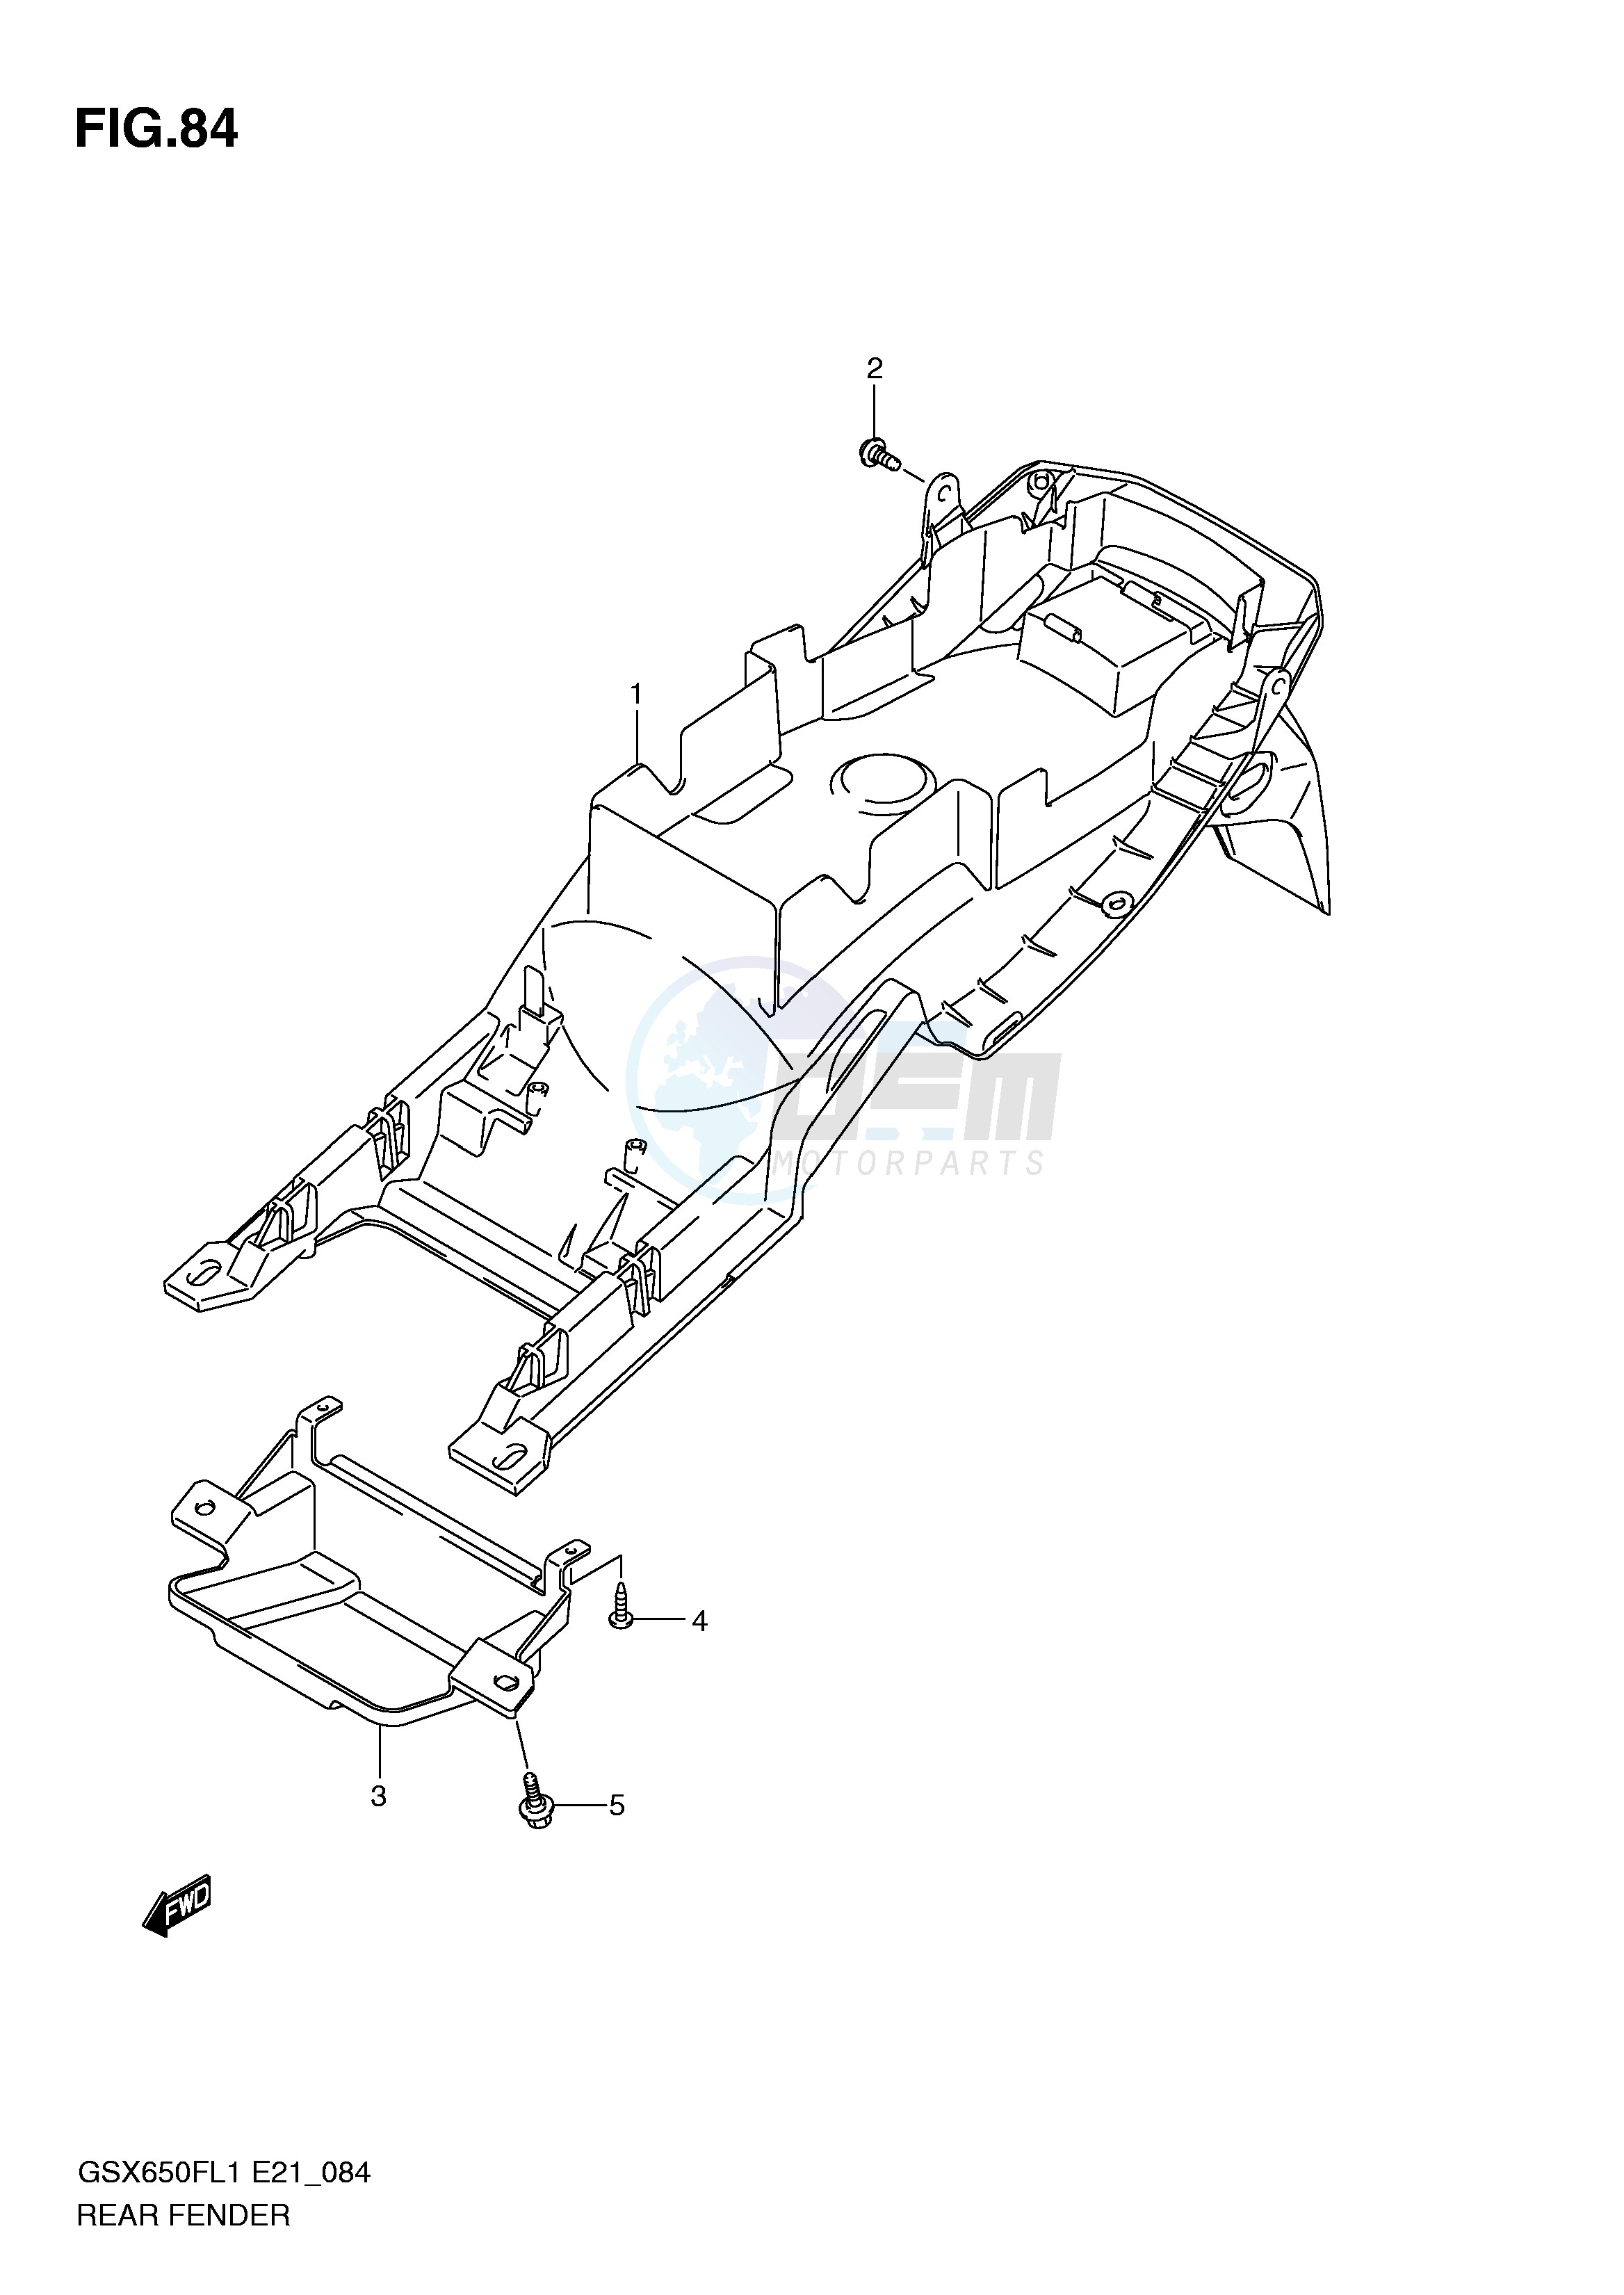 REAR FENDER (GSX650FL1 E24) blueprint